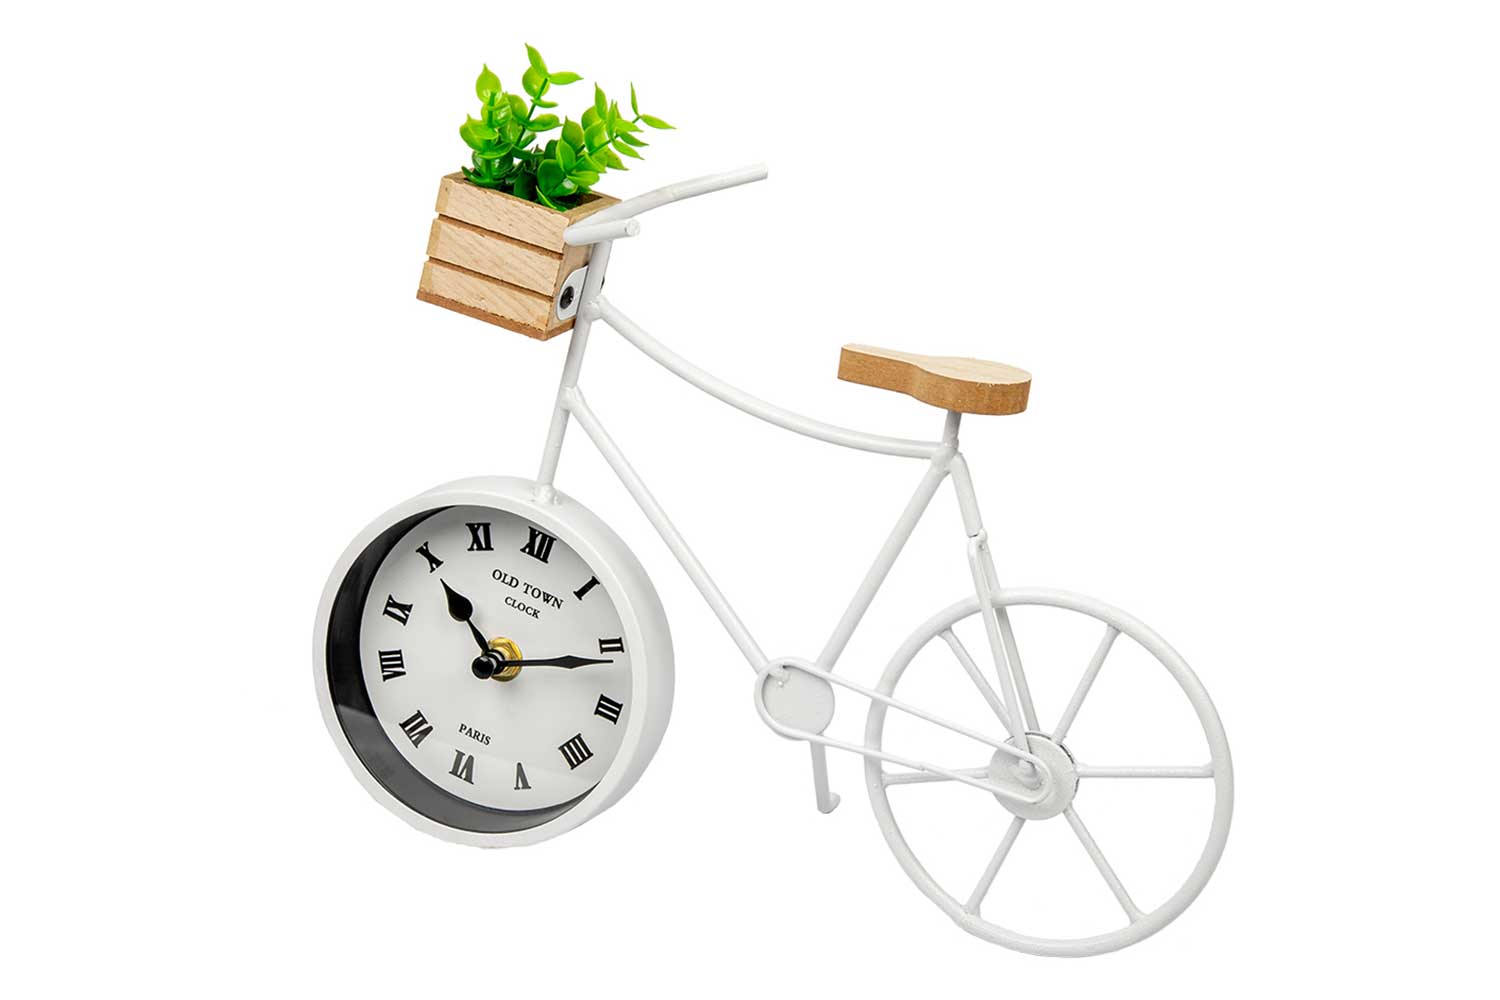 Часы велосипед. Часы настольные велосипед. Часы велосипед настольные белые. Вещицы велосипед. 8 часов на велосипеде